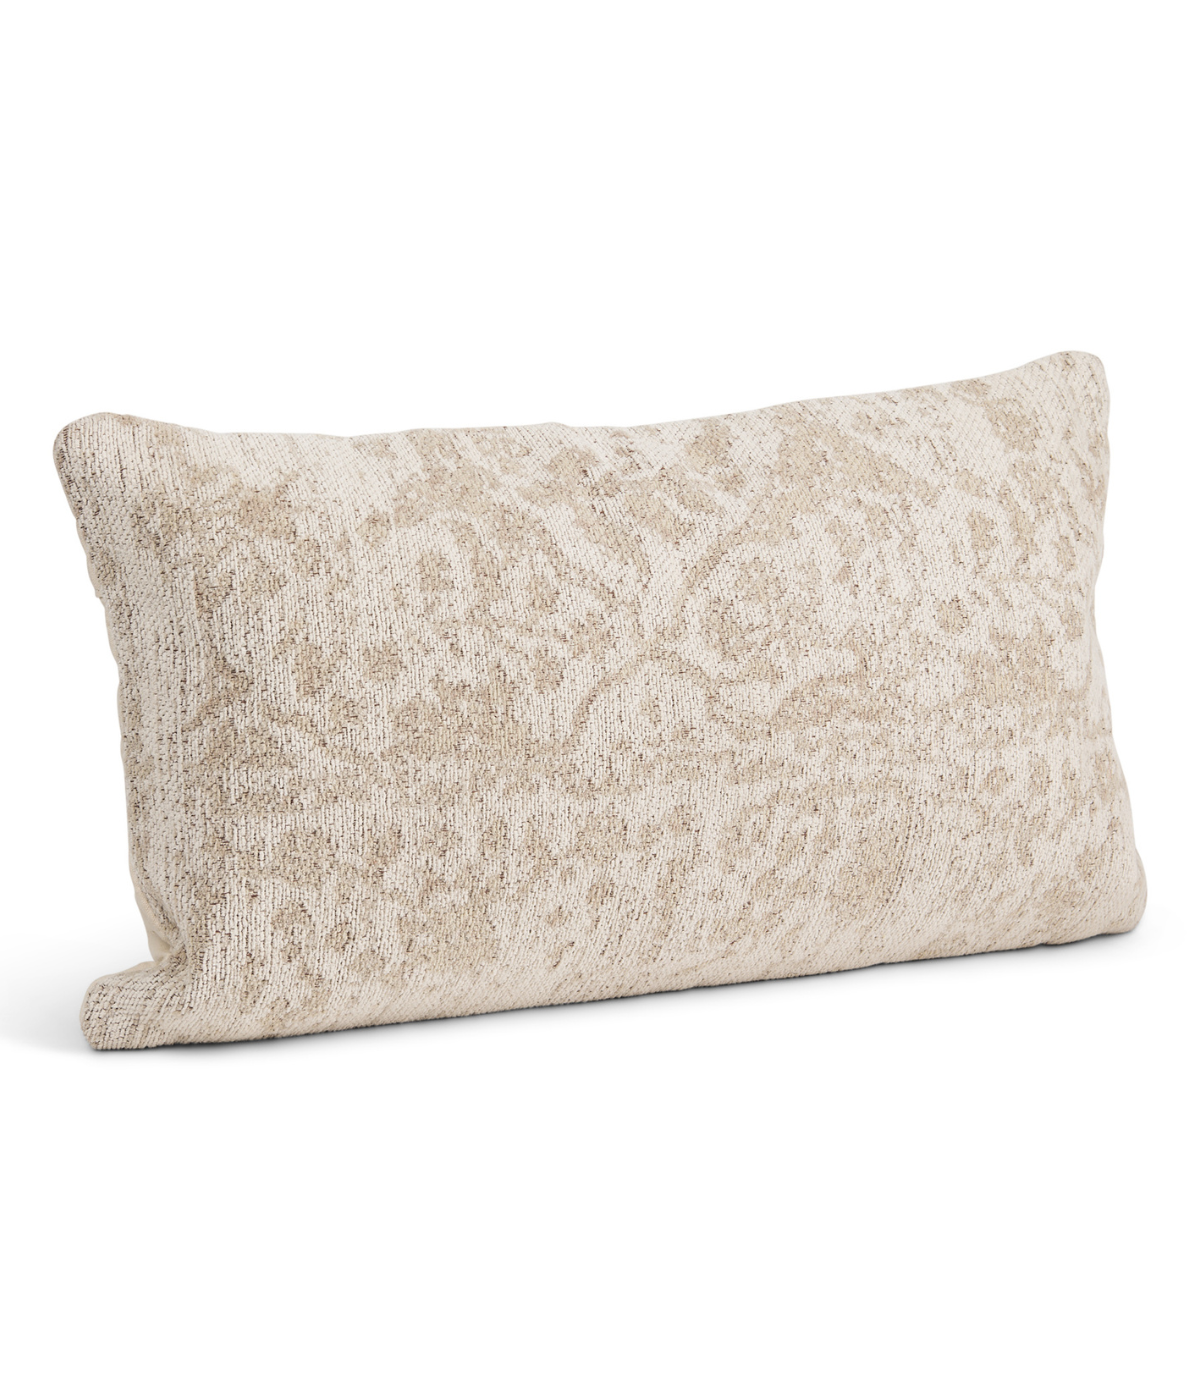 Khloe Pillow